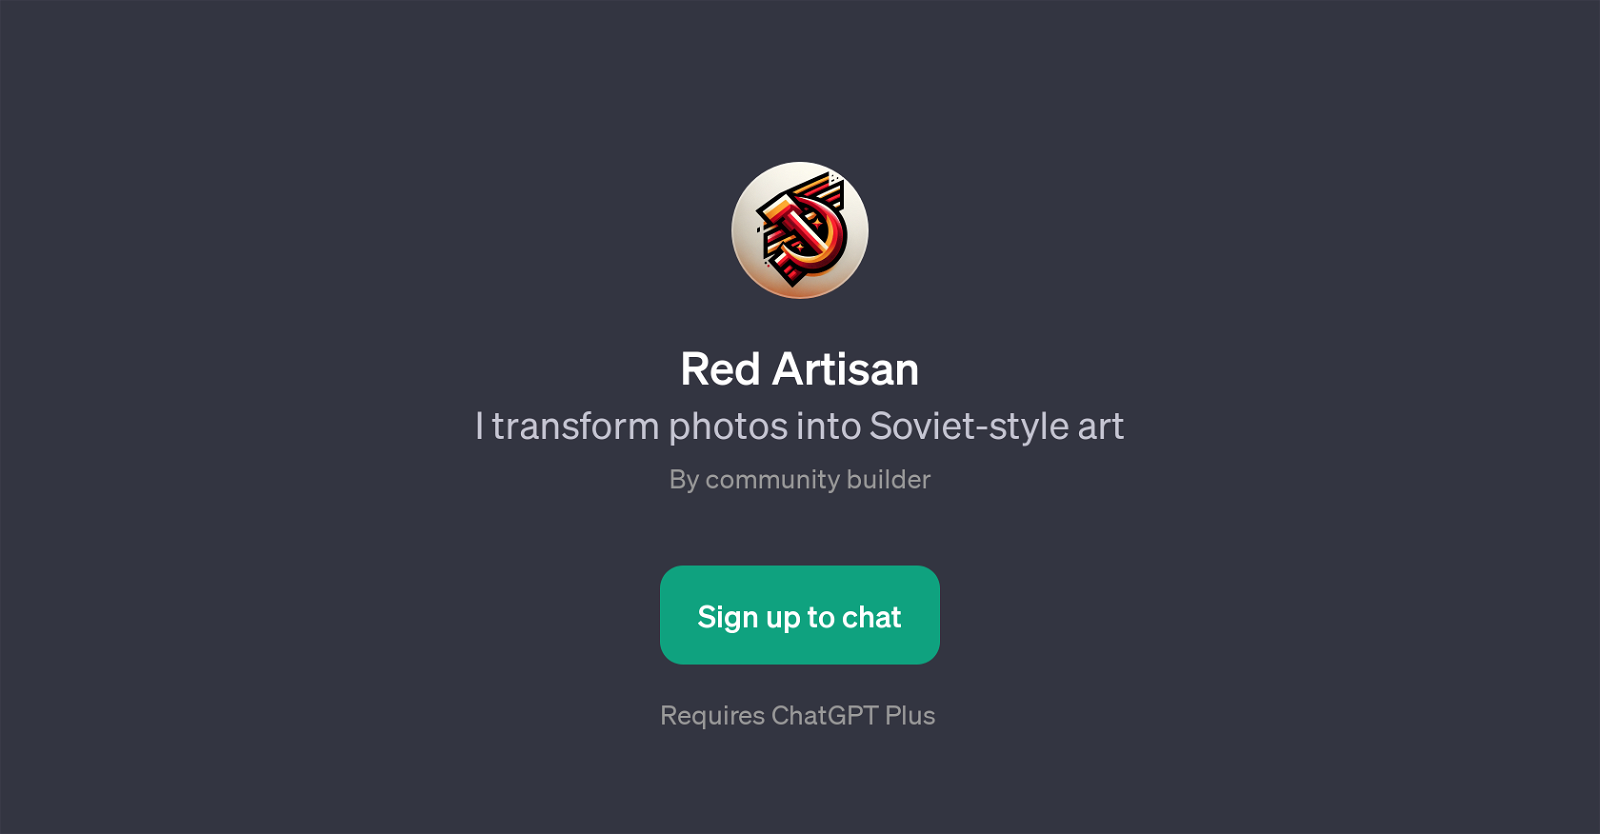 Red Artisan website